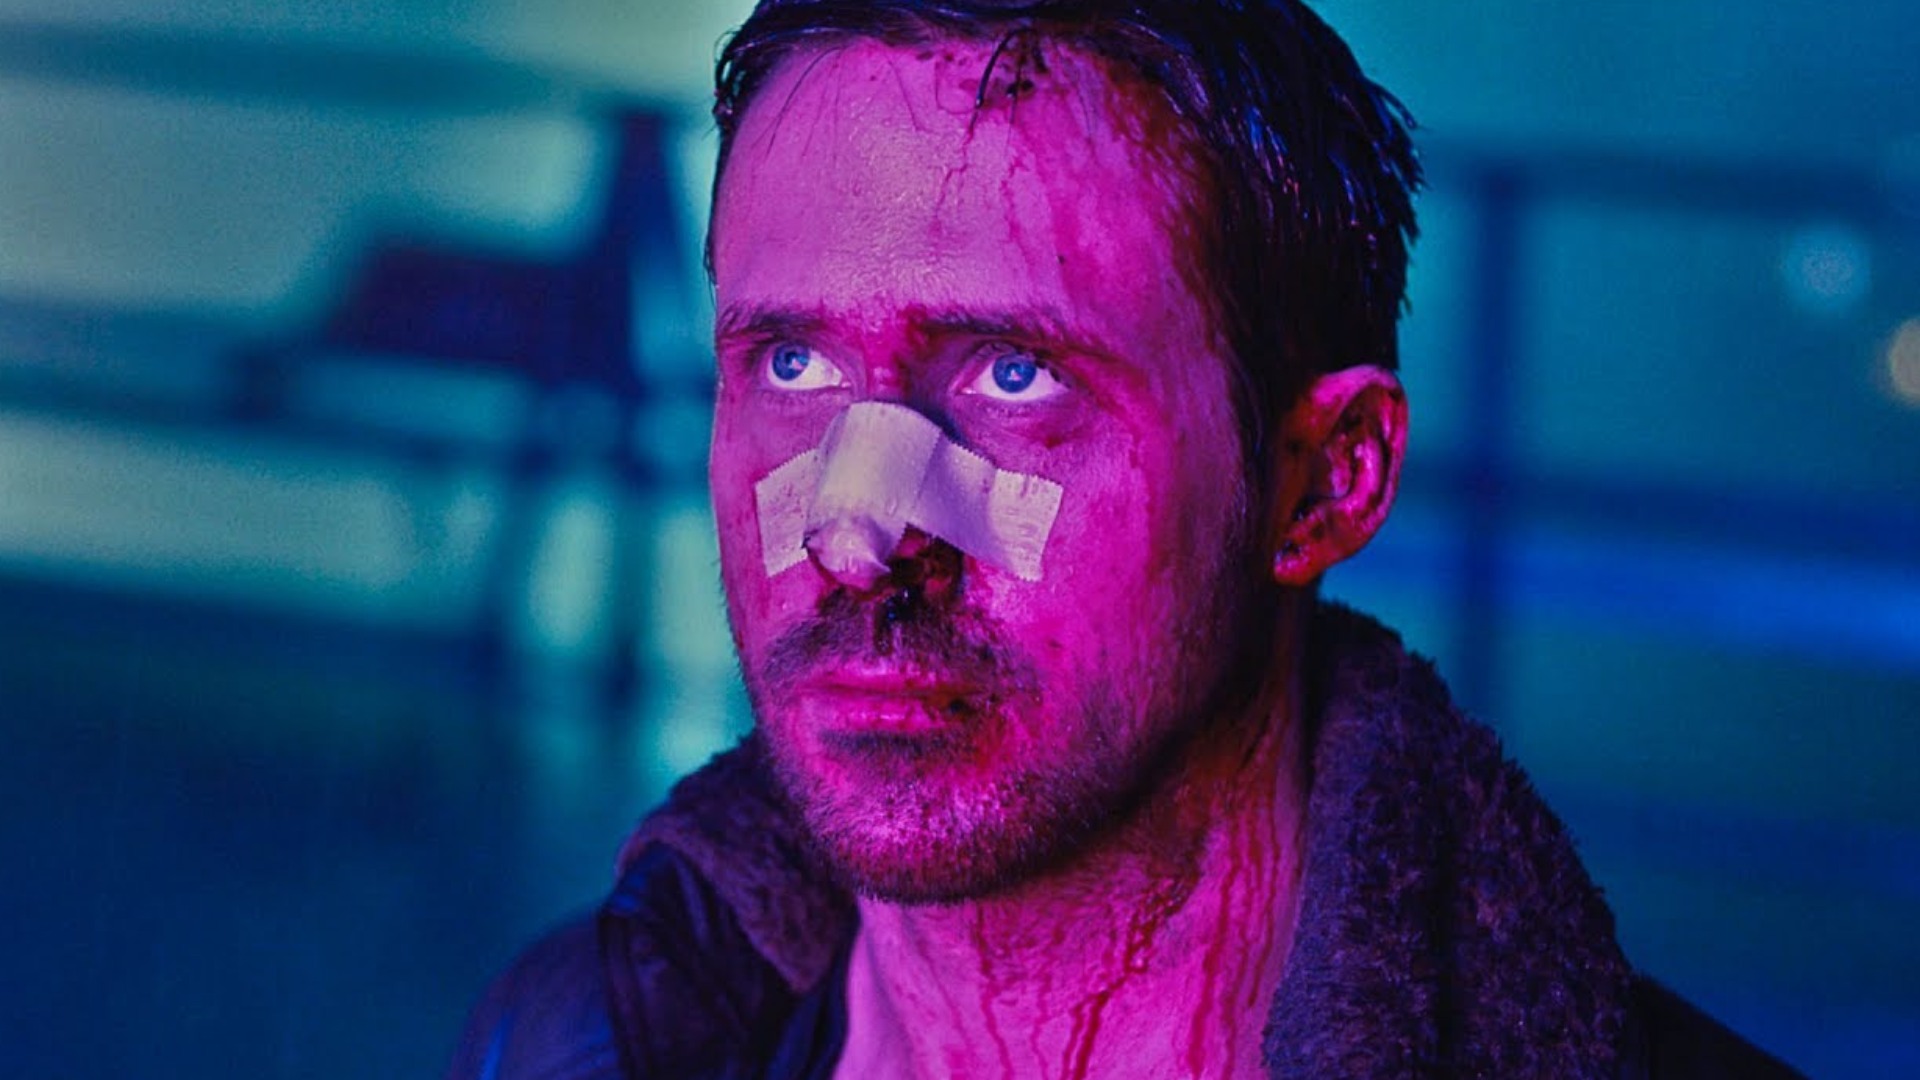 Reviews: Blade Runner - IMDb